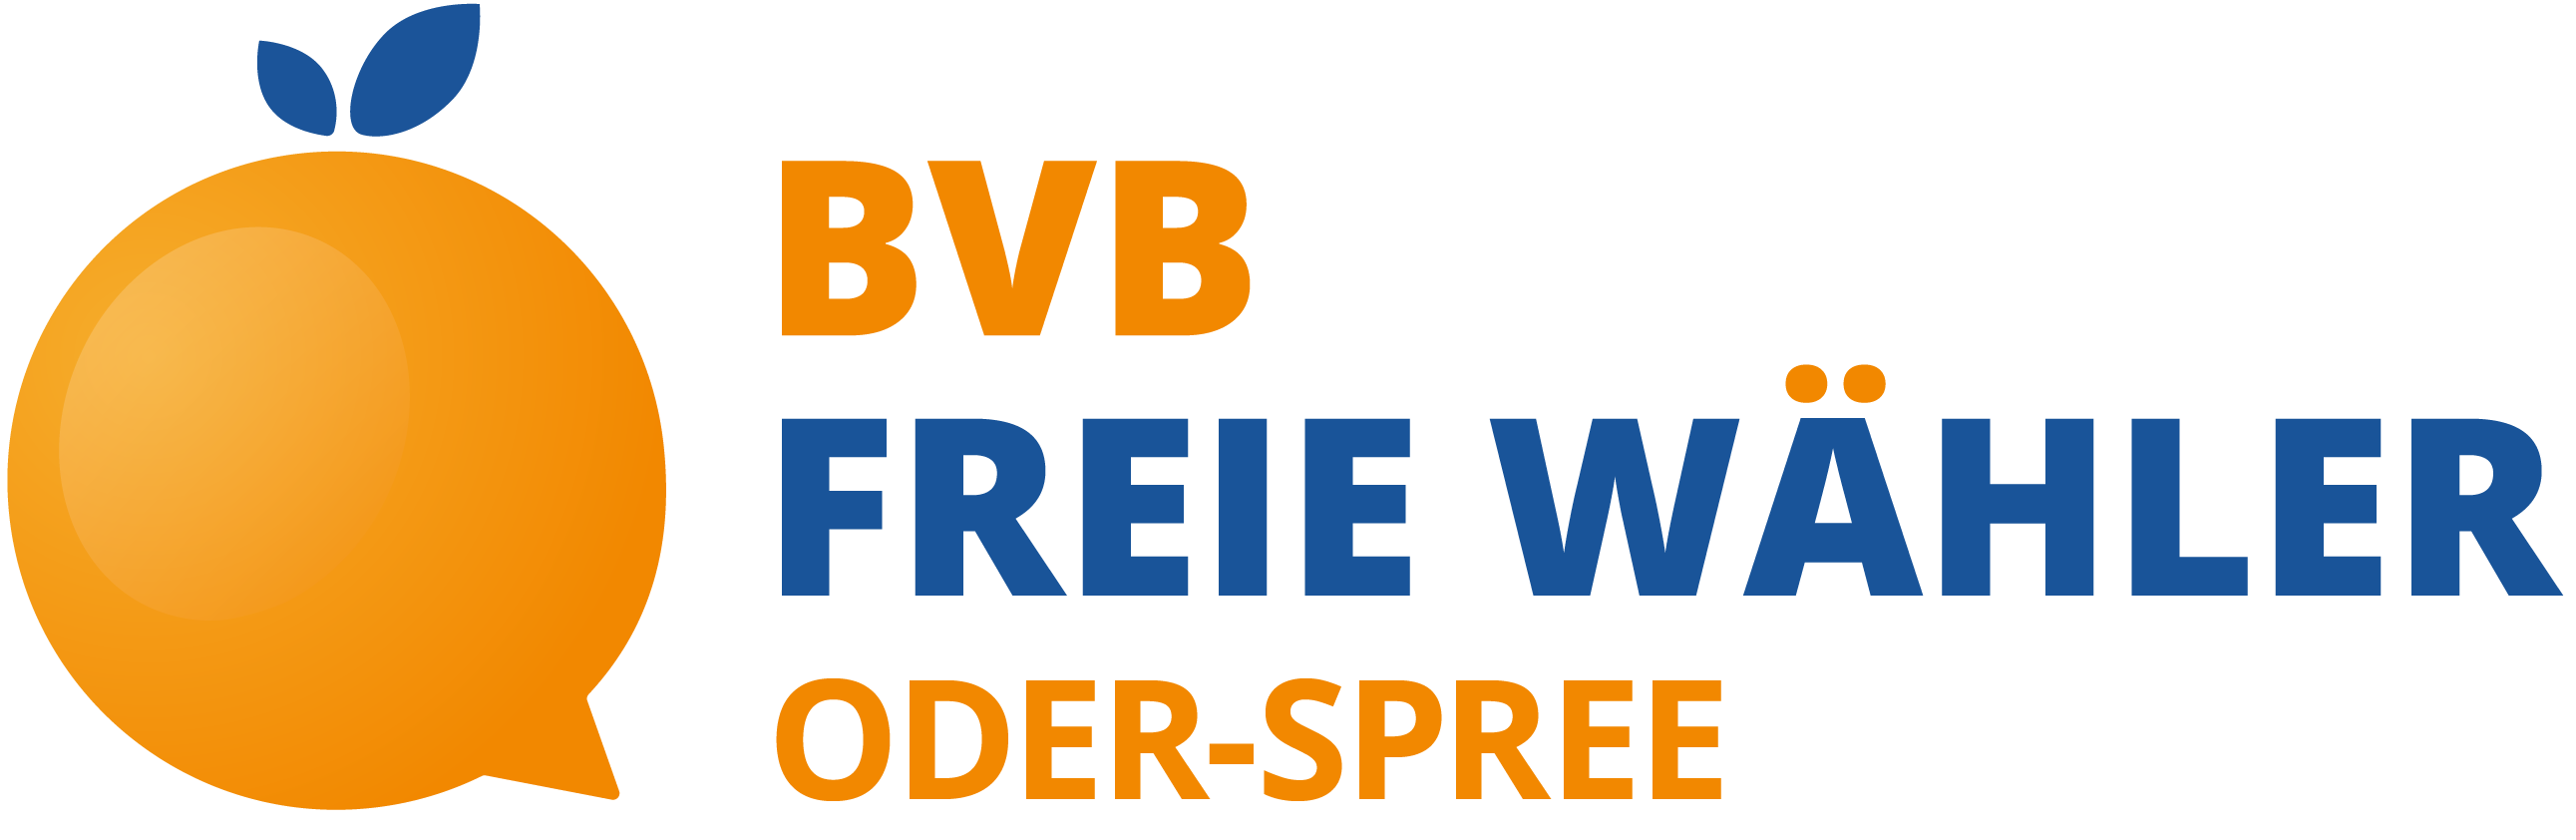 BVB / FREIE WÄHLER Oder-Spree